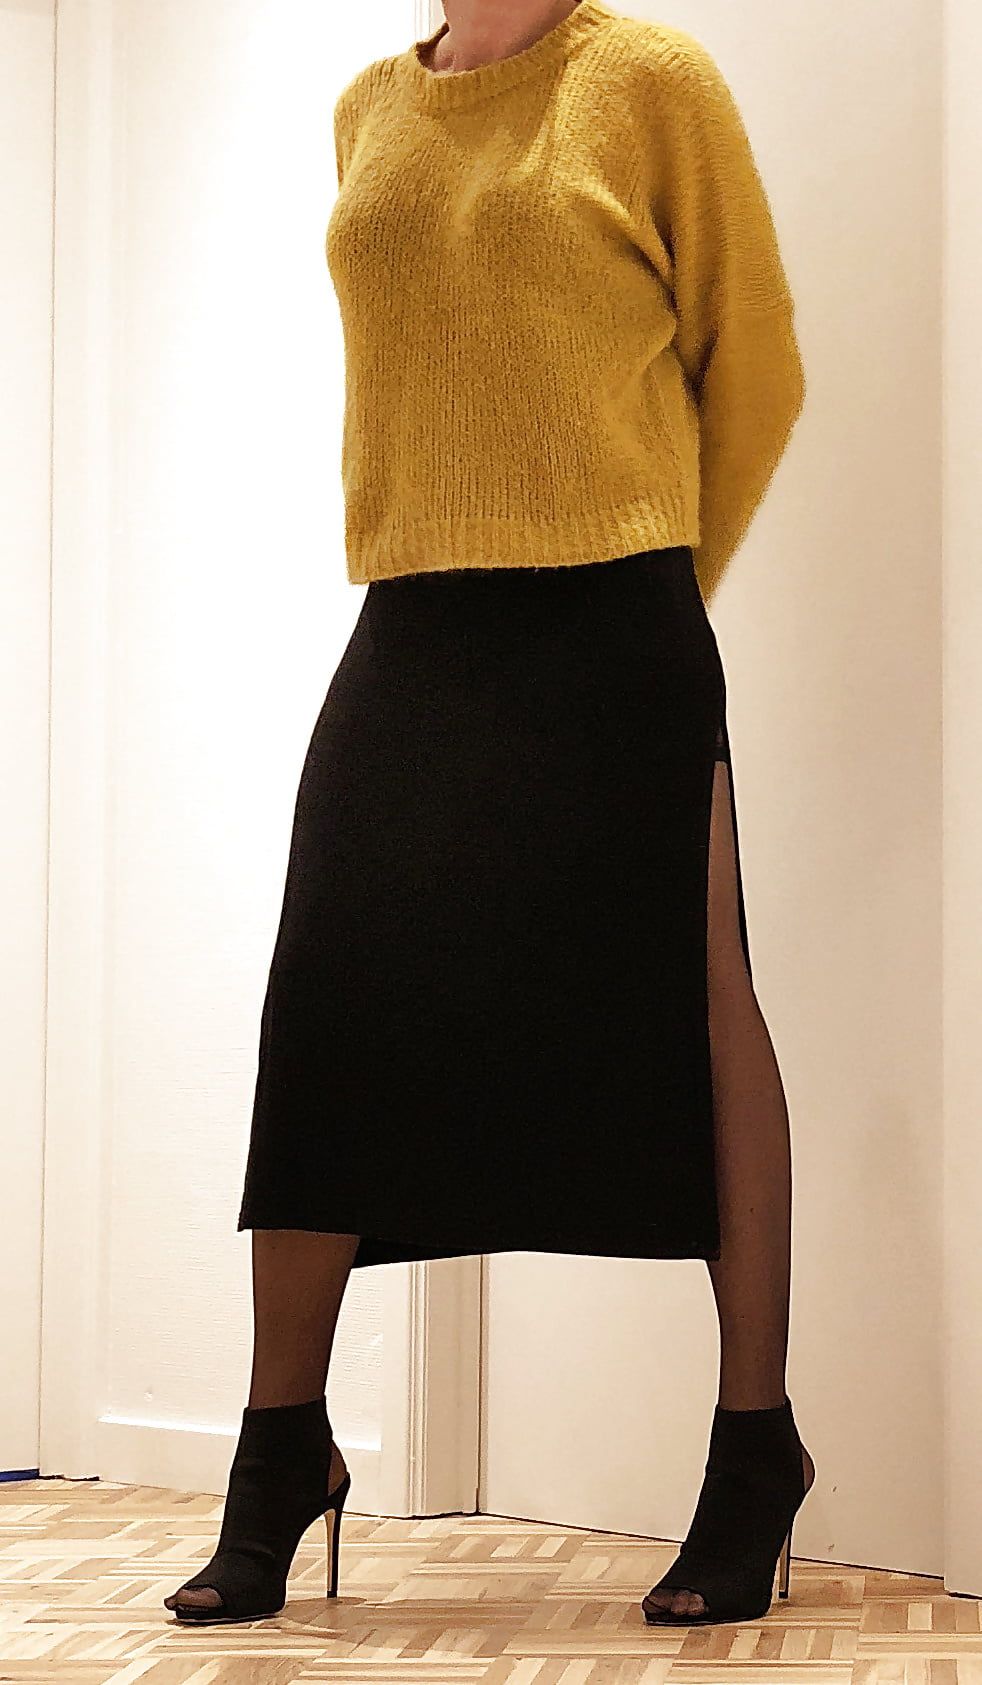 Mustard jumper, black skirt & stay up stockings #7